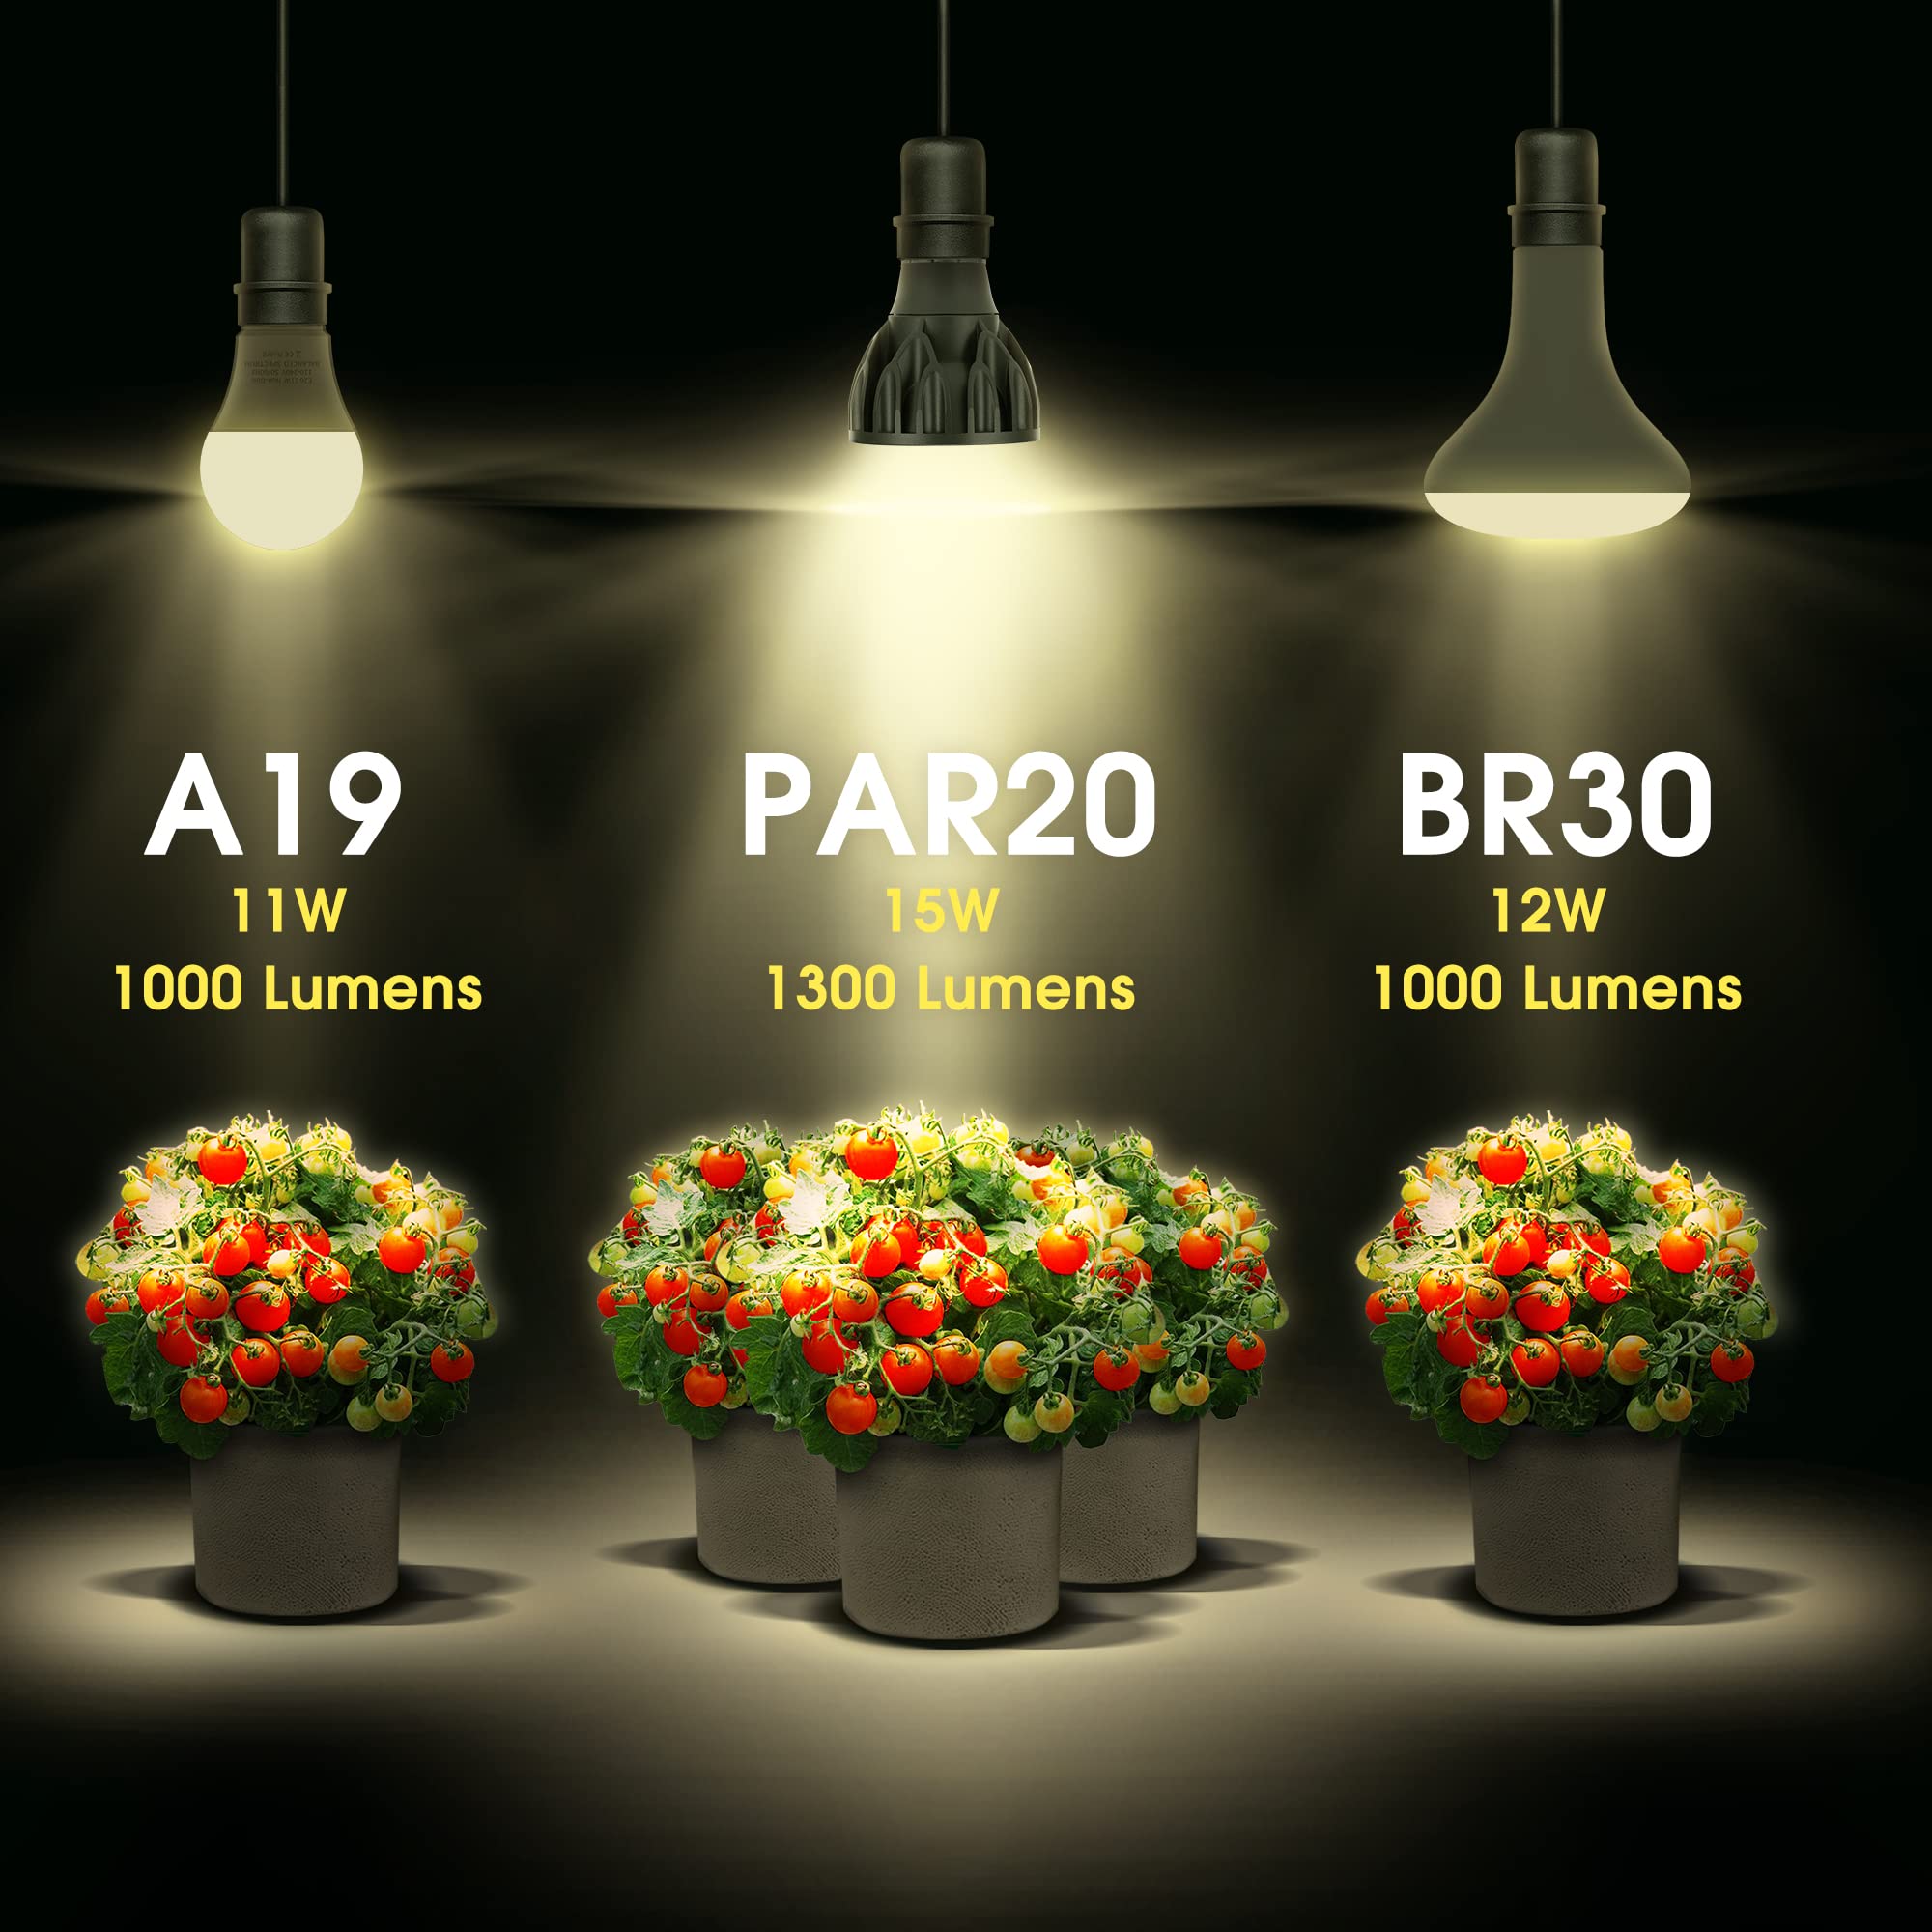 Briignite Grow Light Bulbs,15W Plant Light Bulb, High PPFD, PAR20 Full Spectrum Grow Bulb,150W Equivalent, E26 Base, LED Grow Lights for Indoor Plants, Seed Starting, 1 Pack